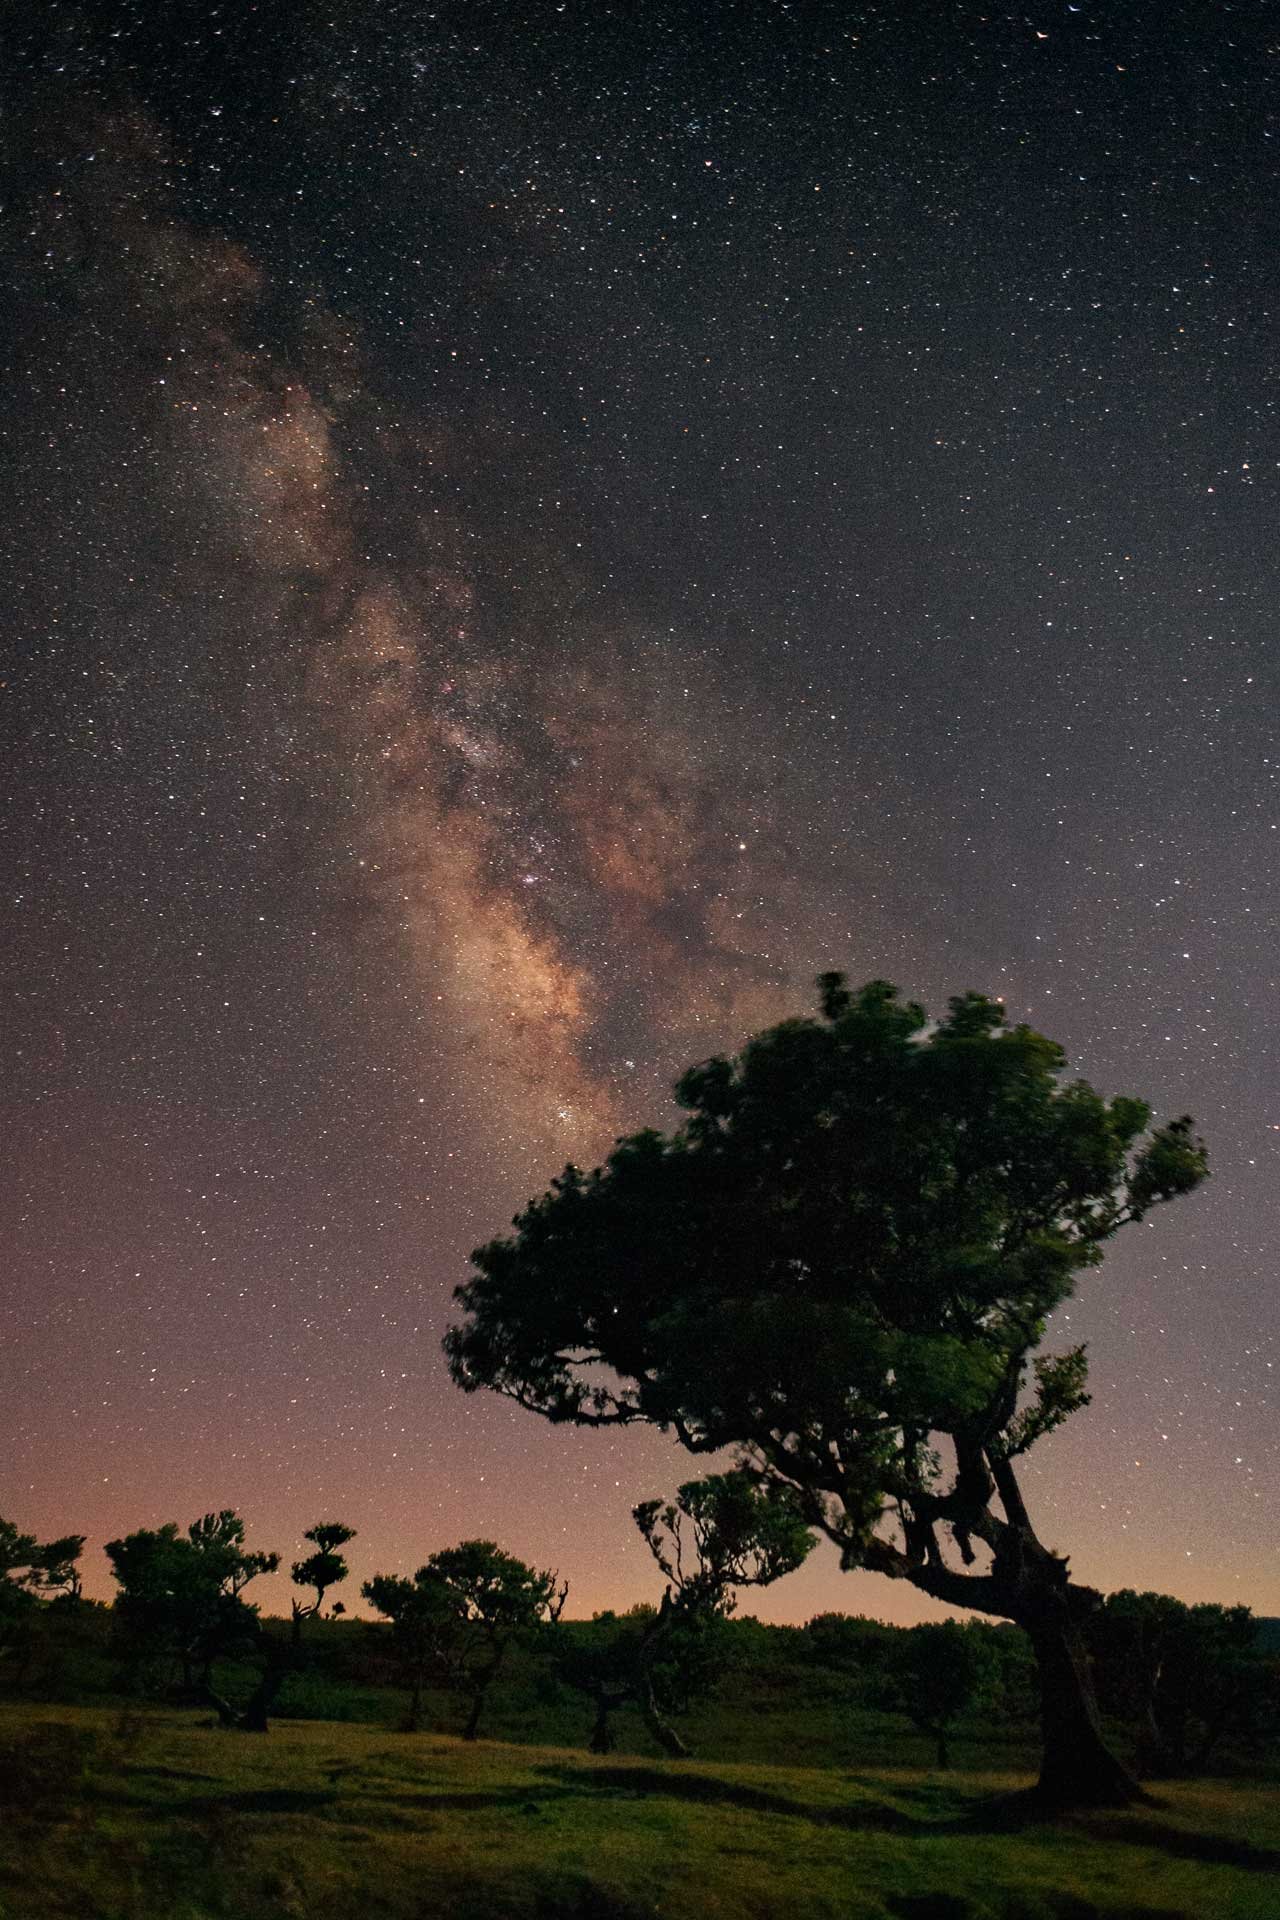 Milky Way galaxy over trees